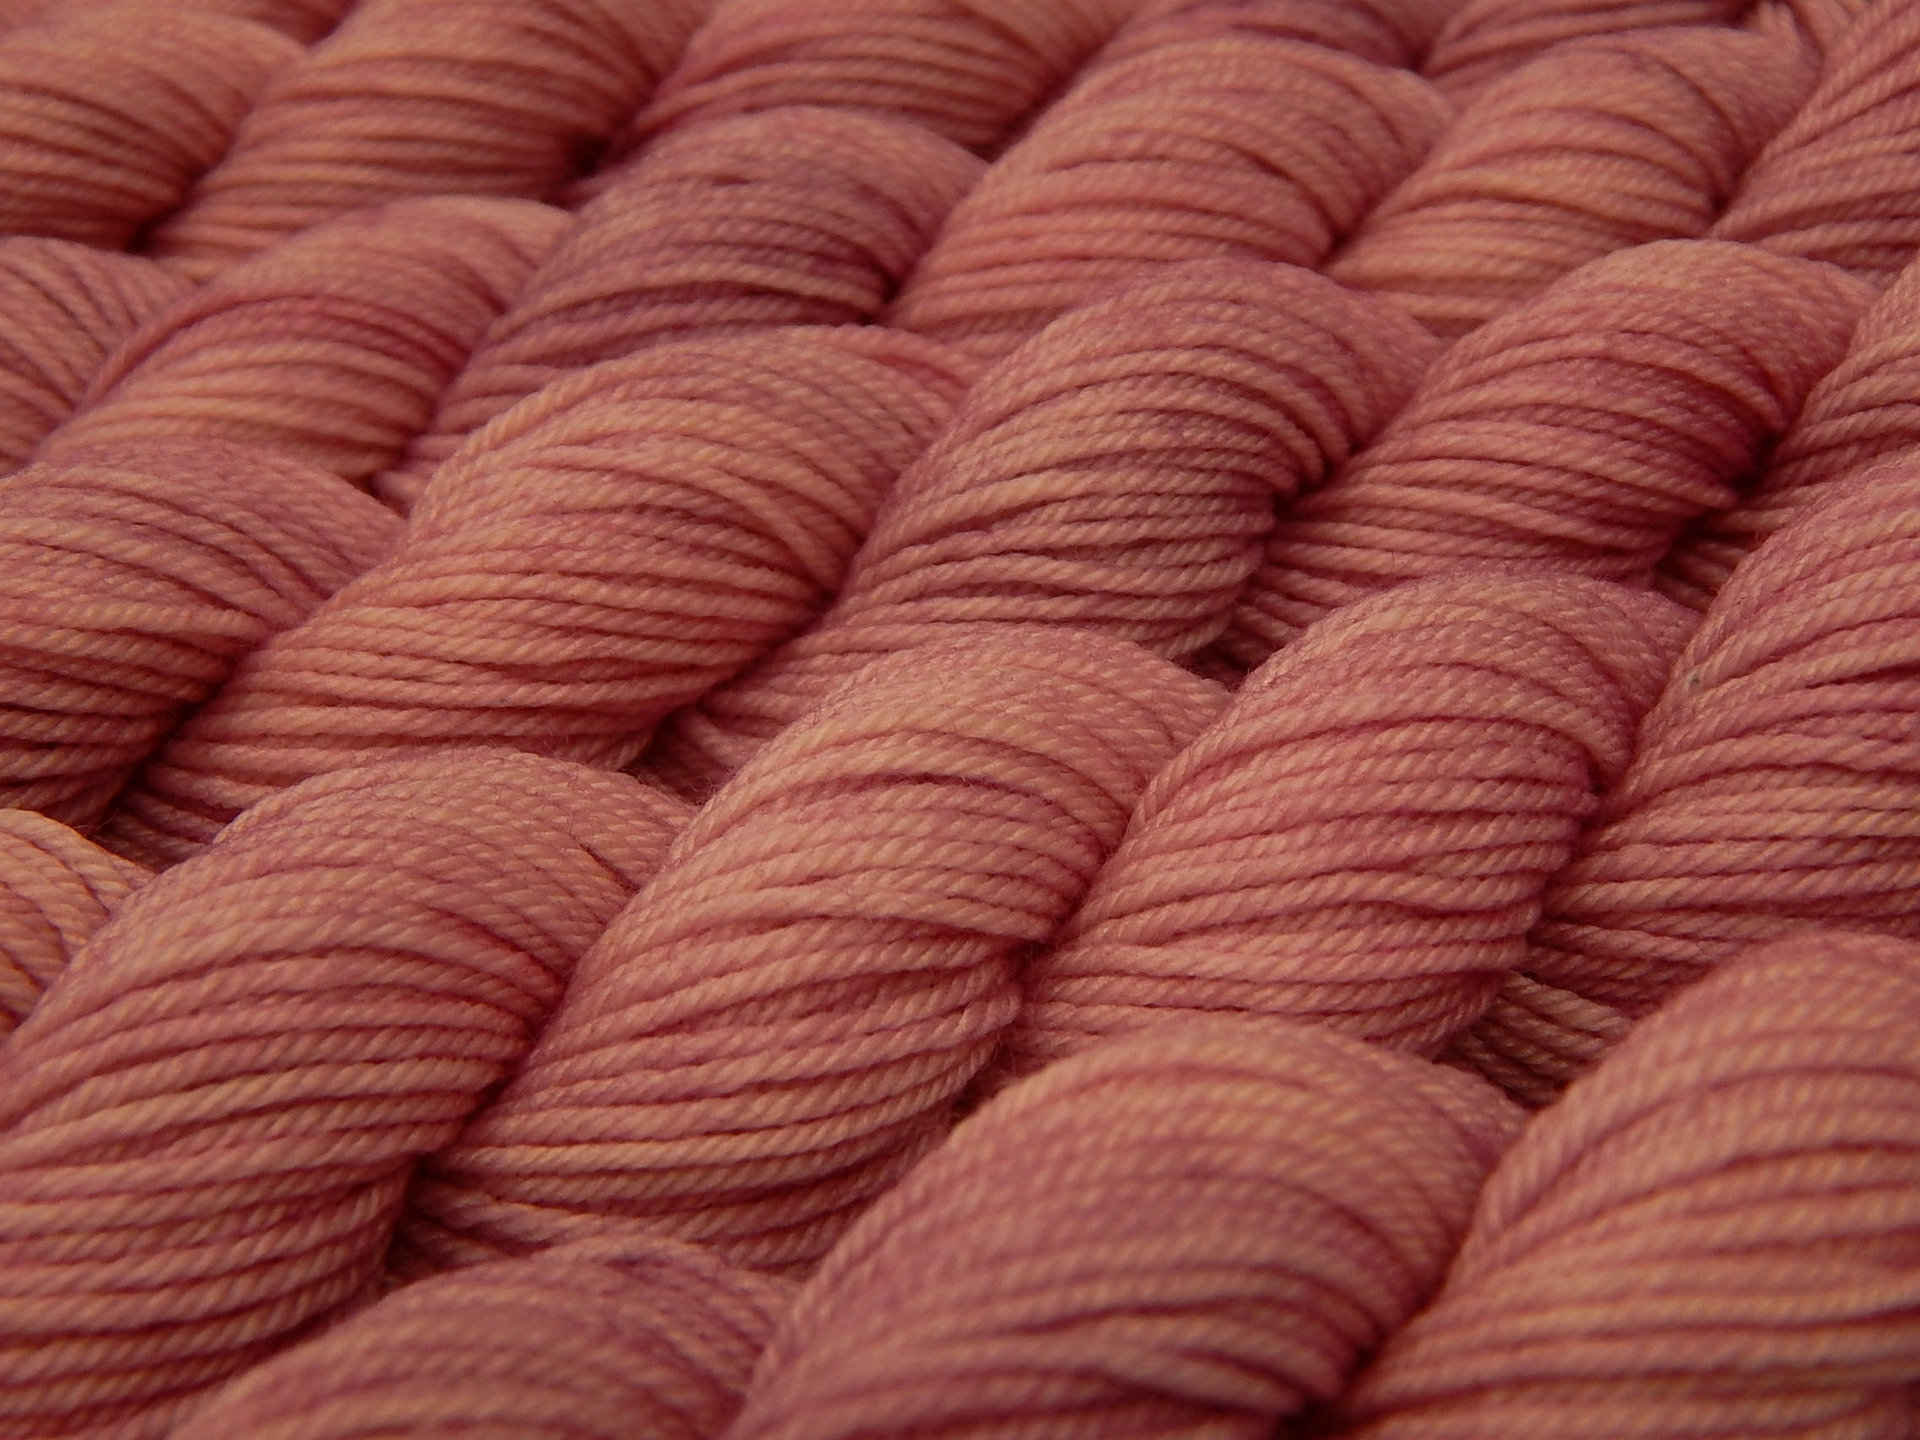 Mini Skeins Sock Yarn, Hand Dyed Yarn, Sock Weight 4 Ply Superwash 100% Merino Wool - Mallow - Fingering Knitting Yarn, Lilac Pink Tonal